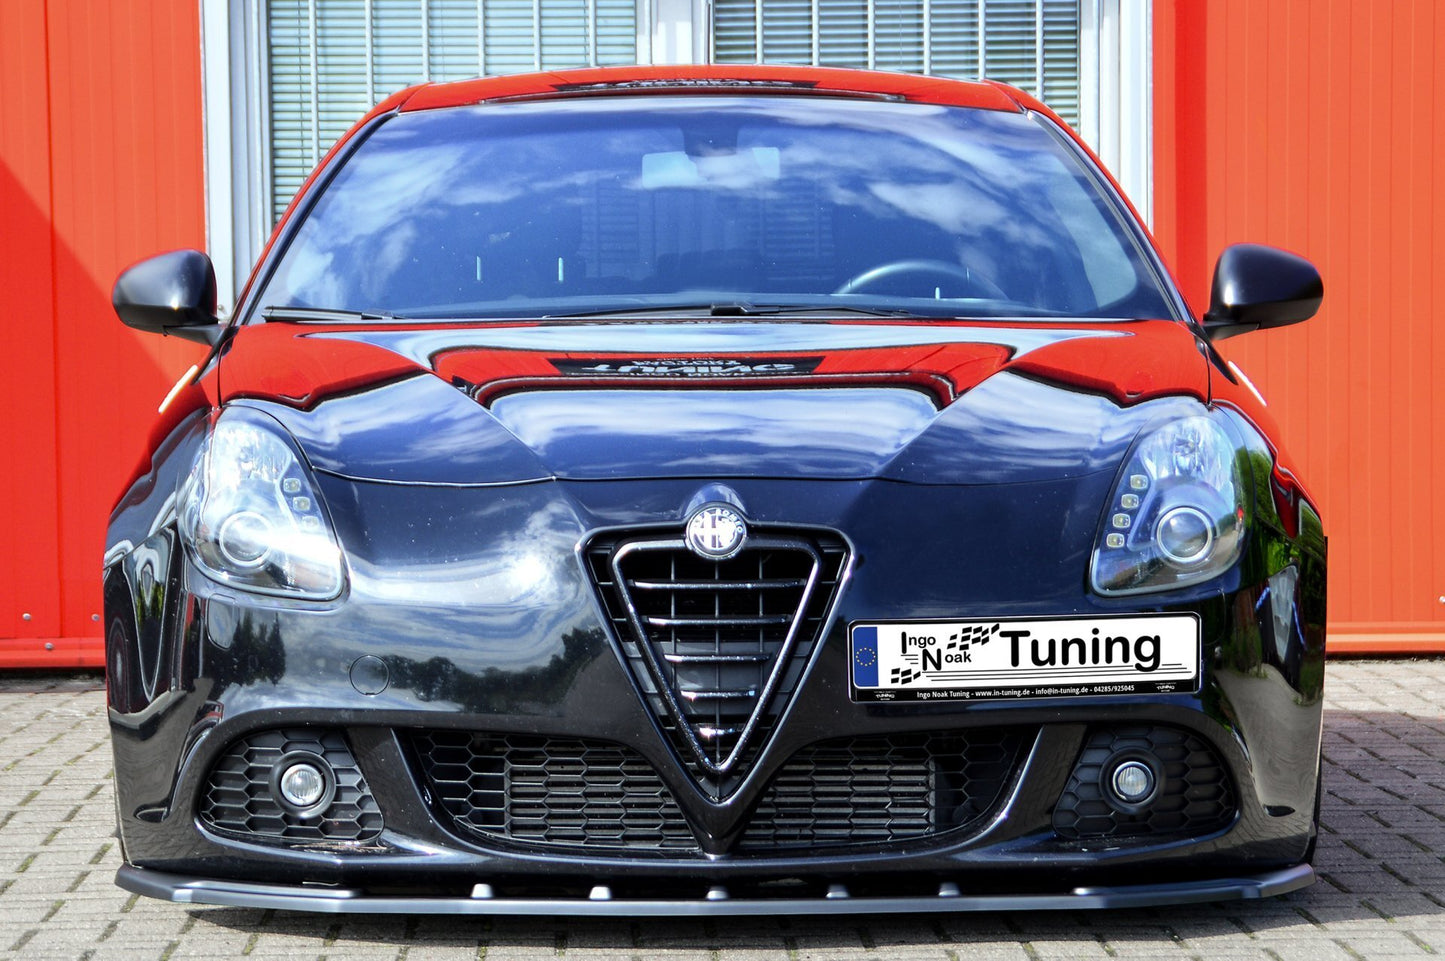 Ingo Noak - Cuplippe aus ABS für Alfa Romeo Giulietta 940